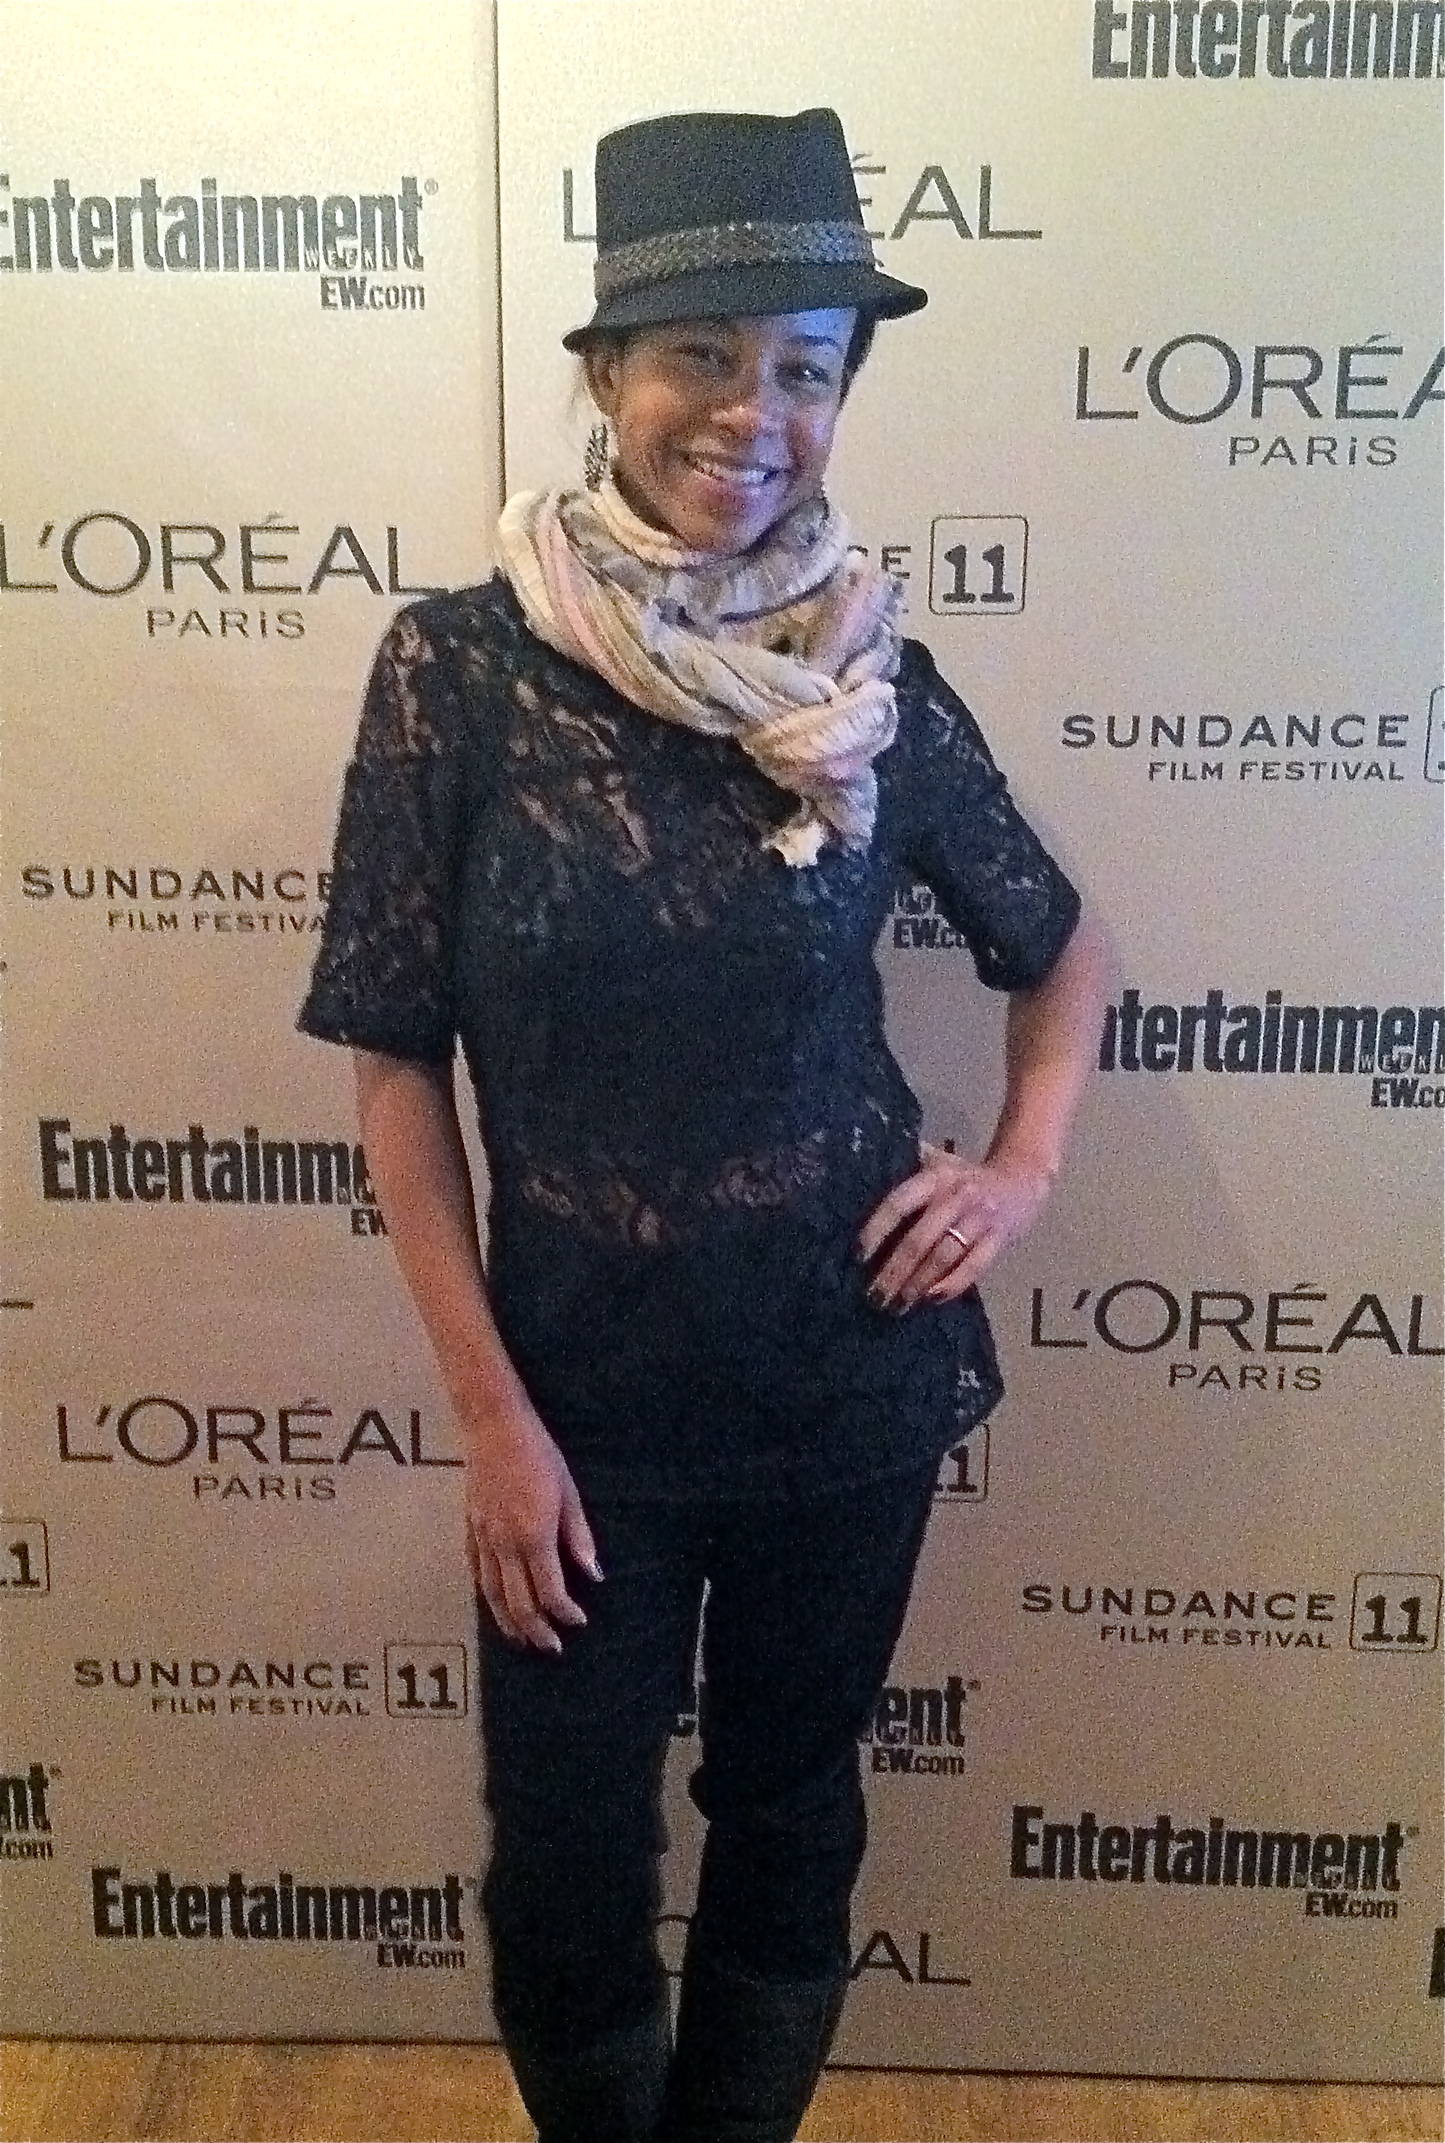 L'oreal/Entertainment Weekly Event January 2011- Aasha Davis